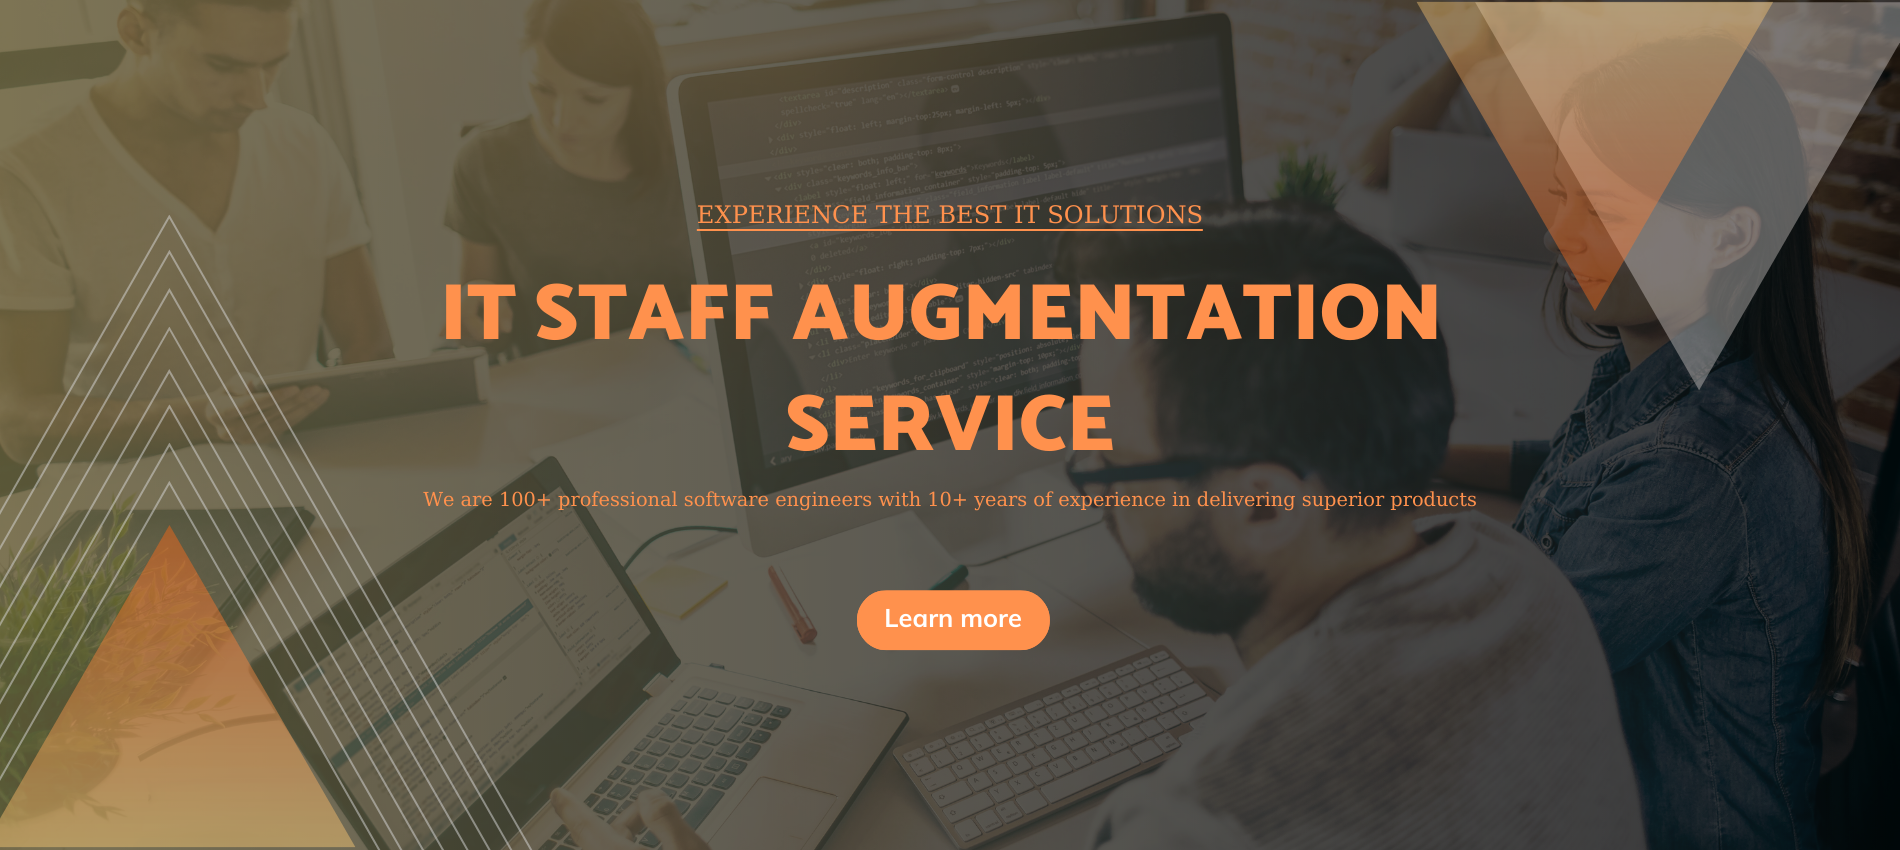 IT Staff Augmentation Services